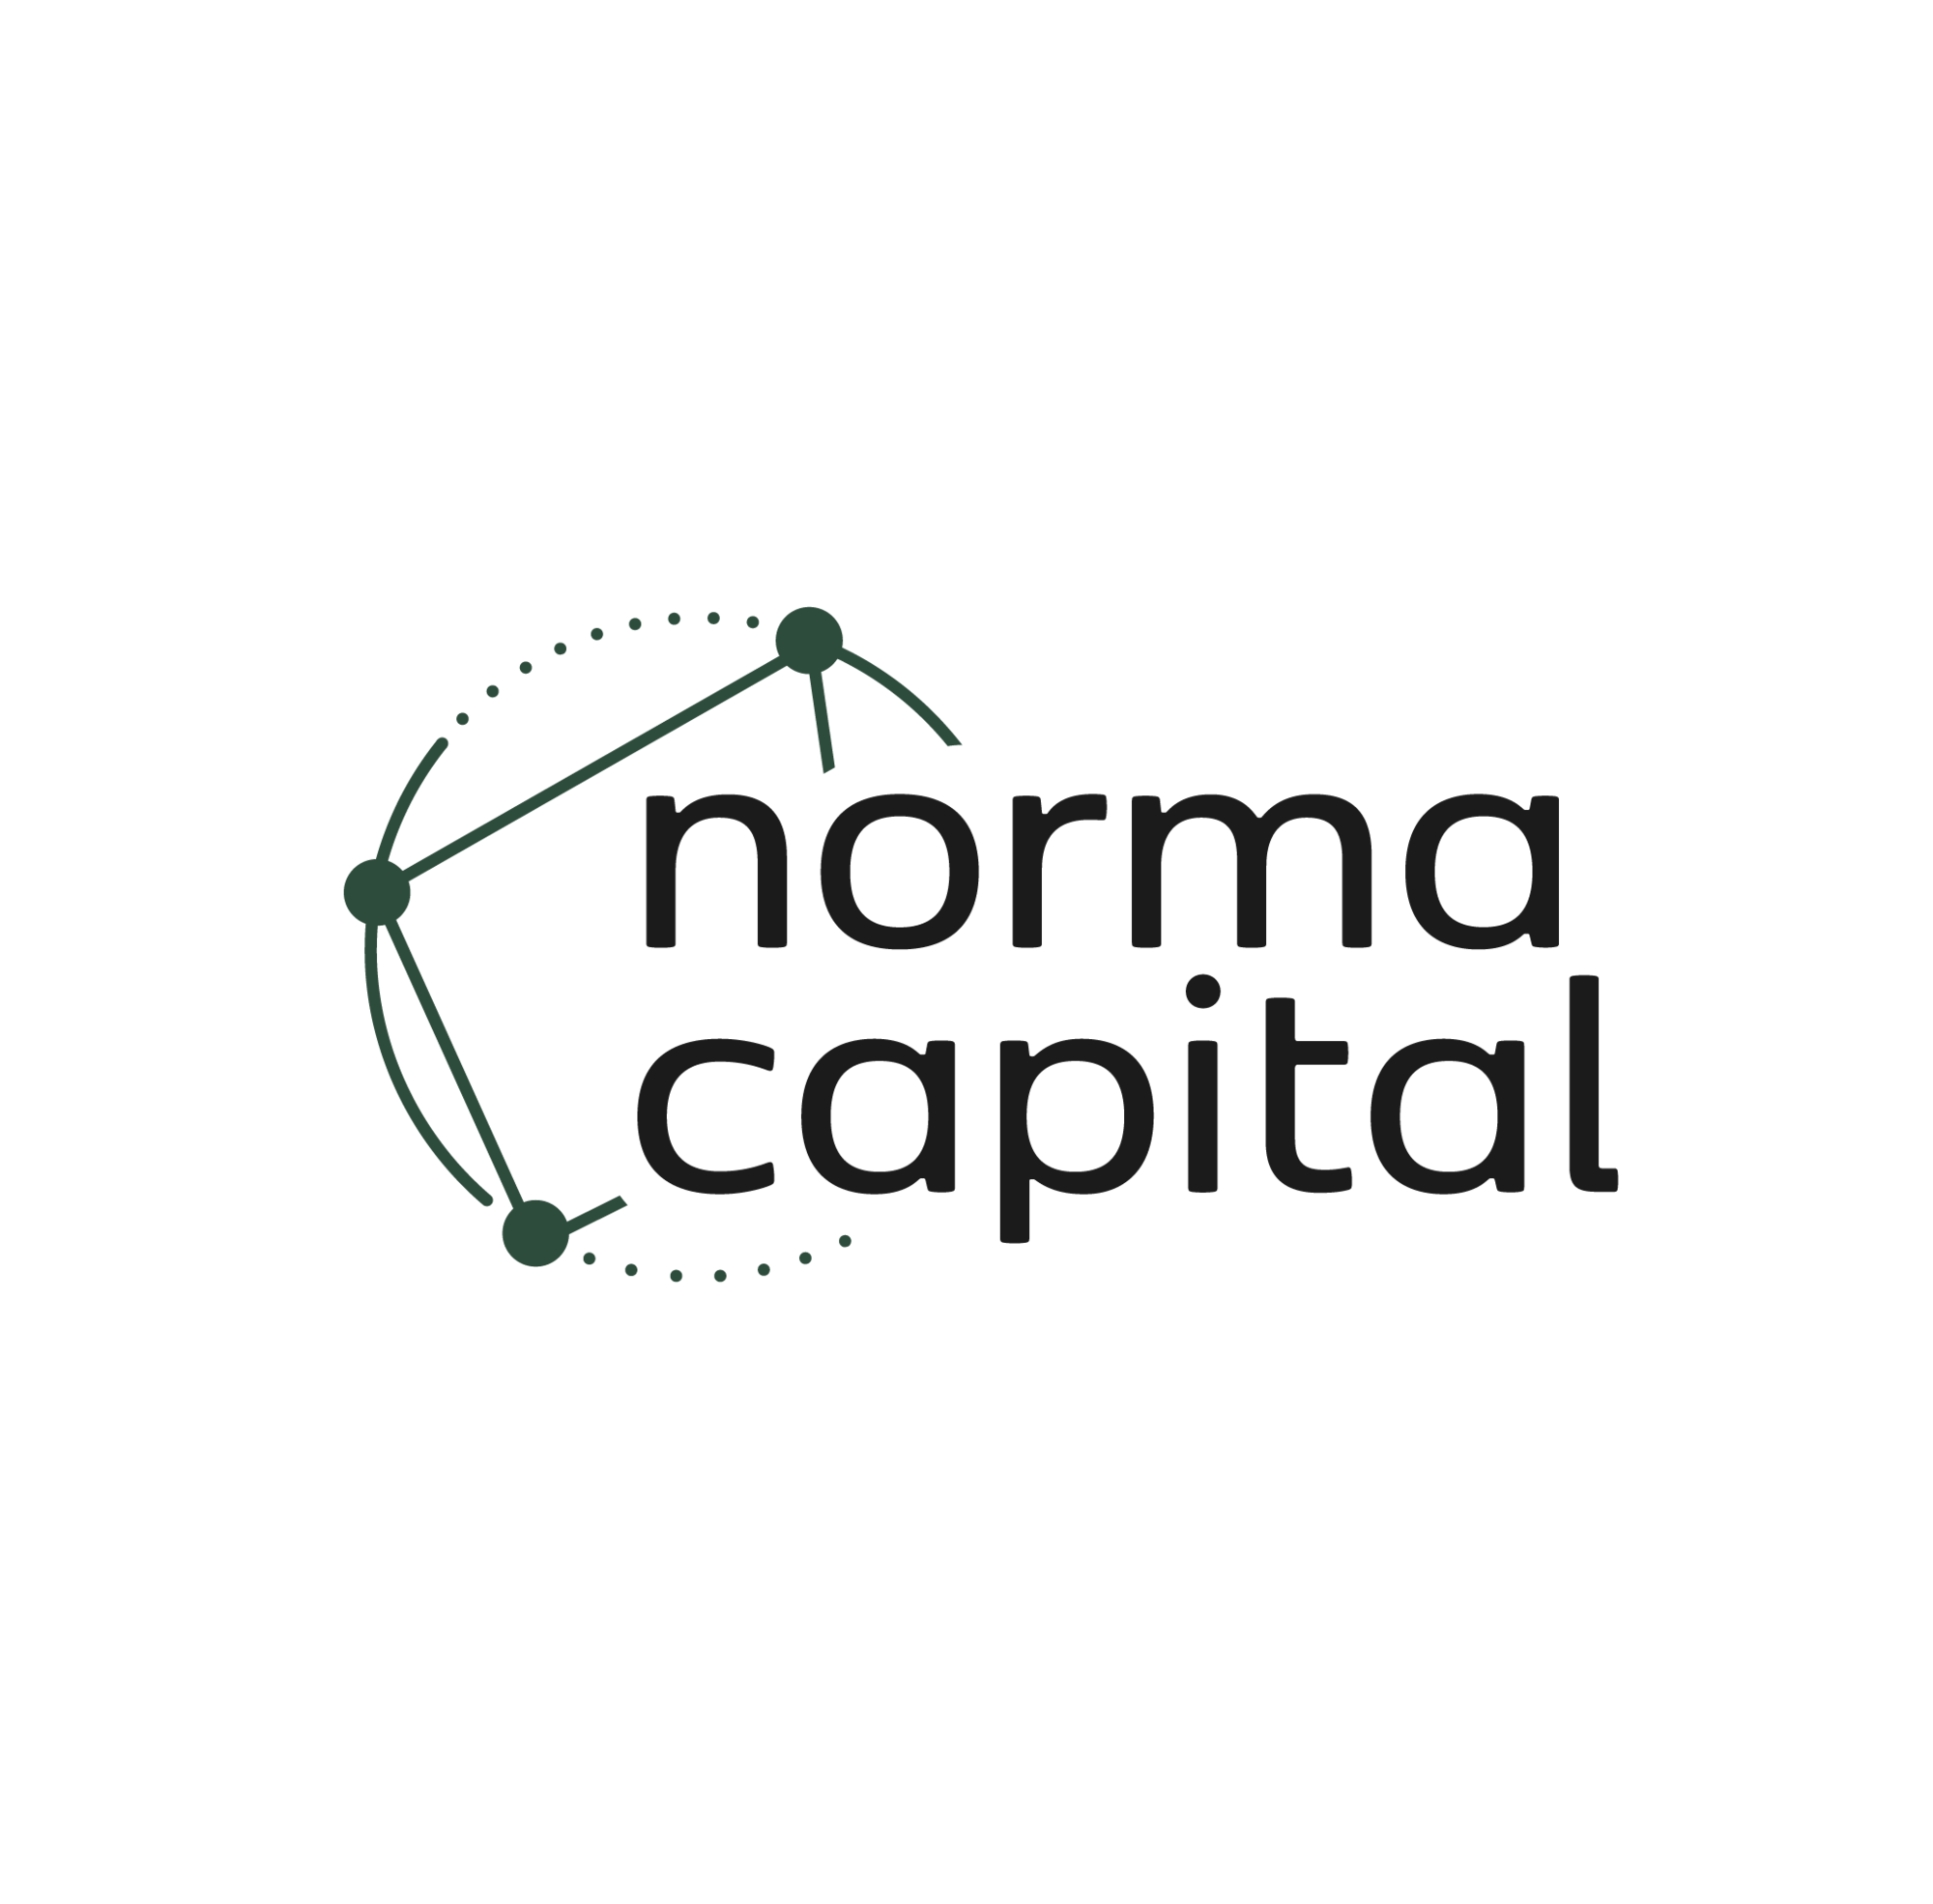 Norma Capital